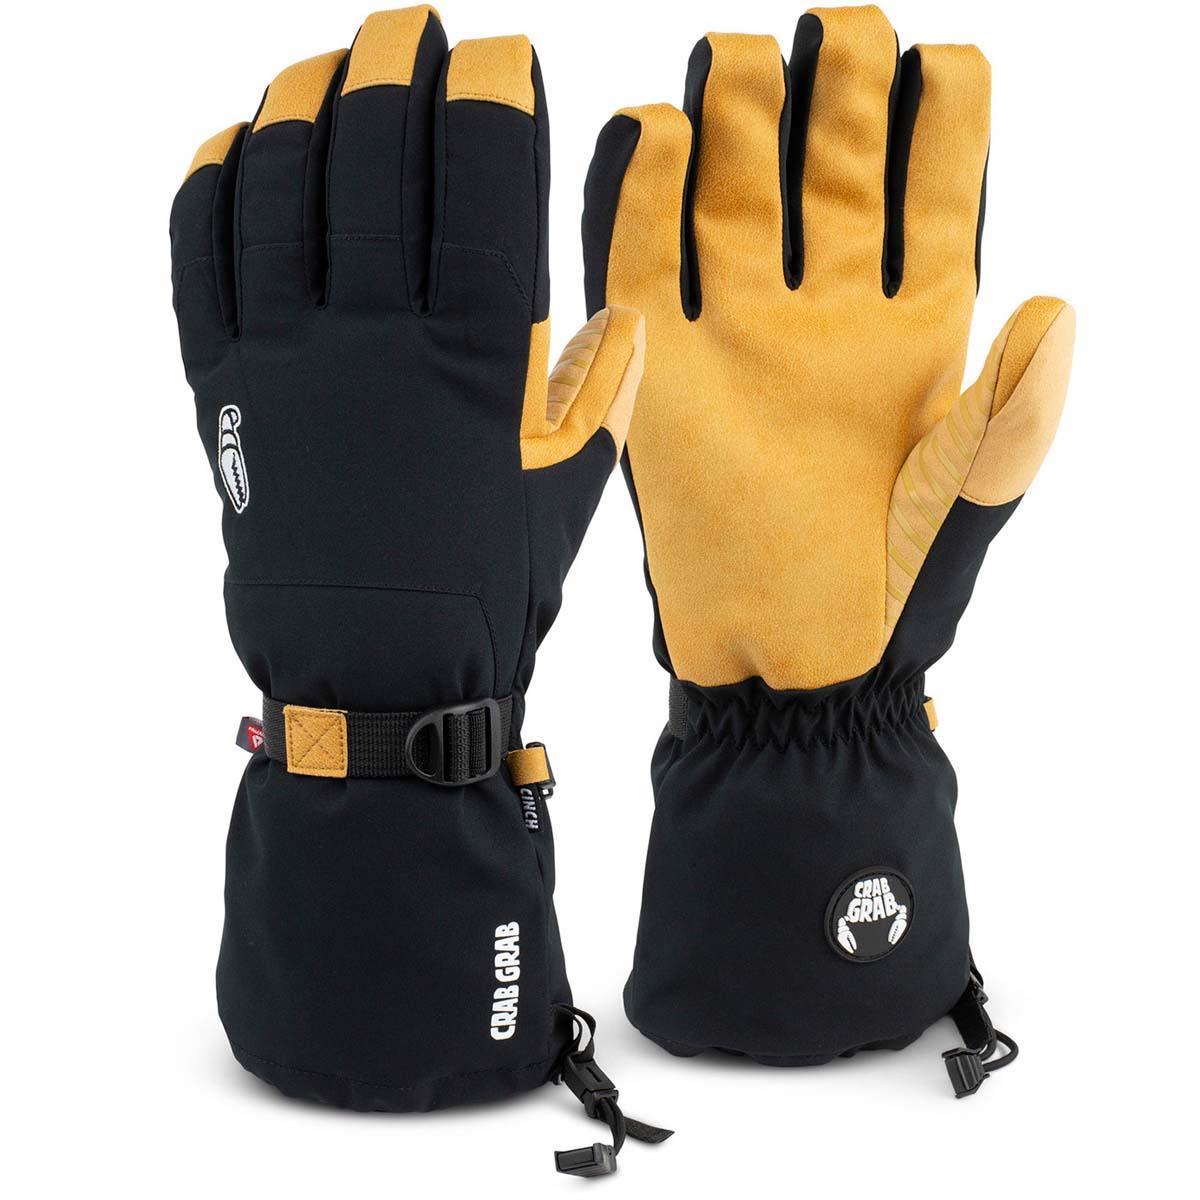 https://www.winterwomen.com/files/store/items/c/r/crab-grab-fa23-mittens-cinch-glove-black-and-tan-combo.jpg